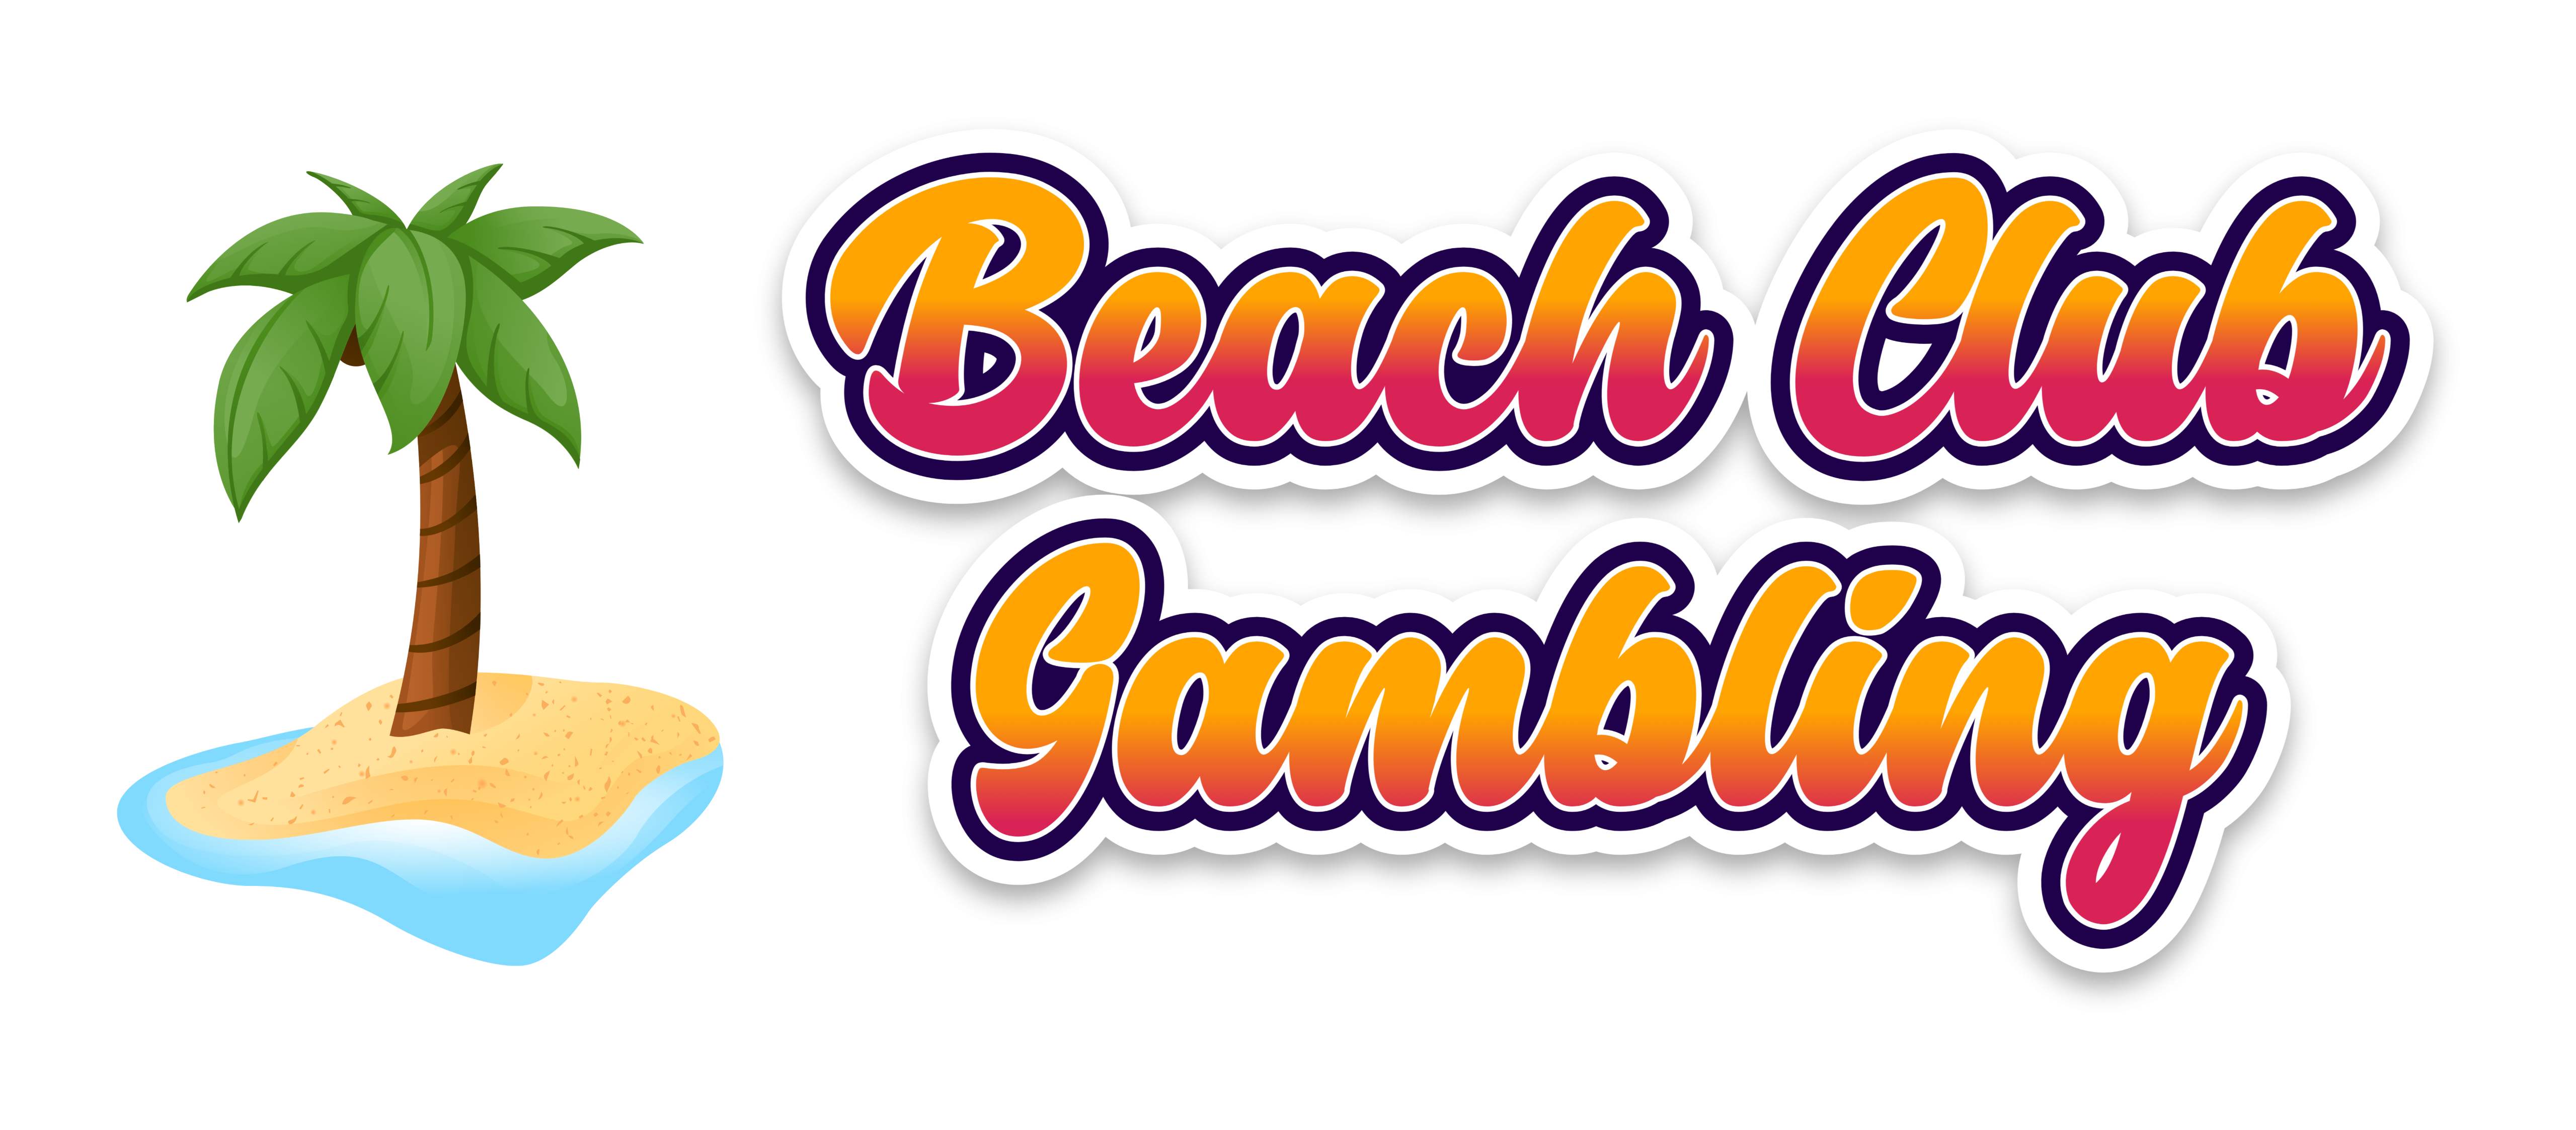 BEACH CLUB GAMBLING